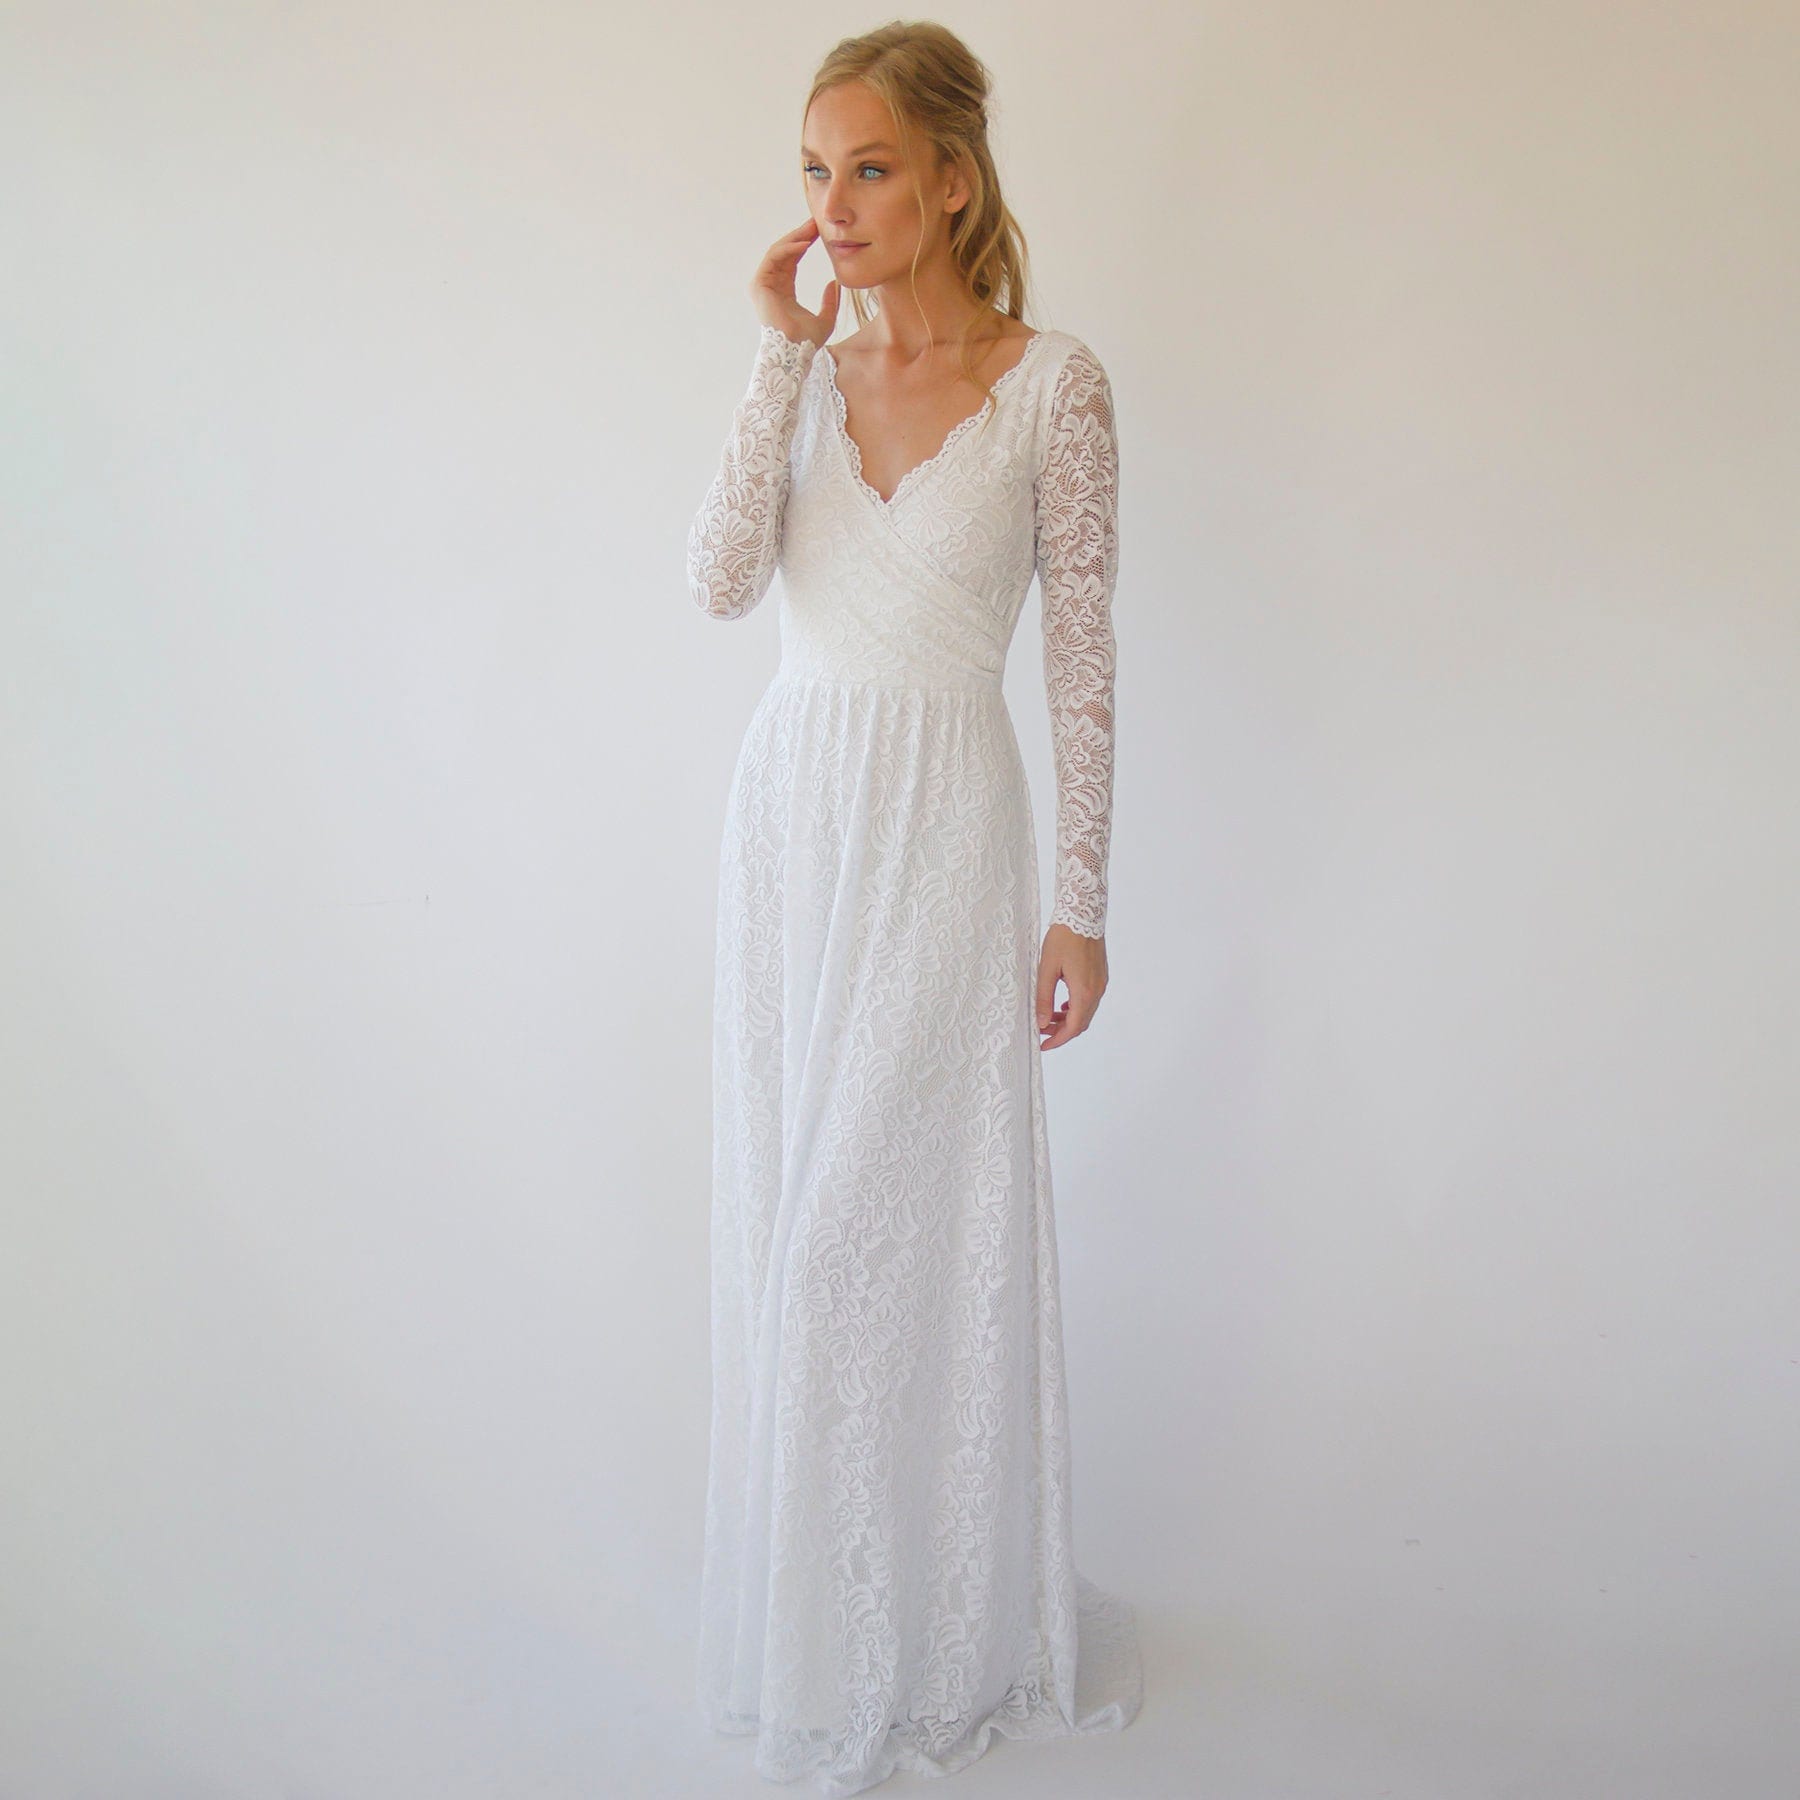 Ivory Wrap Lace Wedding Dress With Long ...